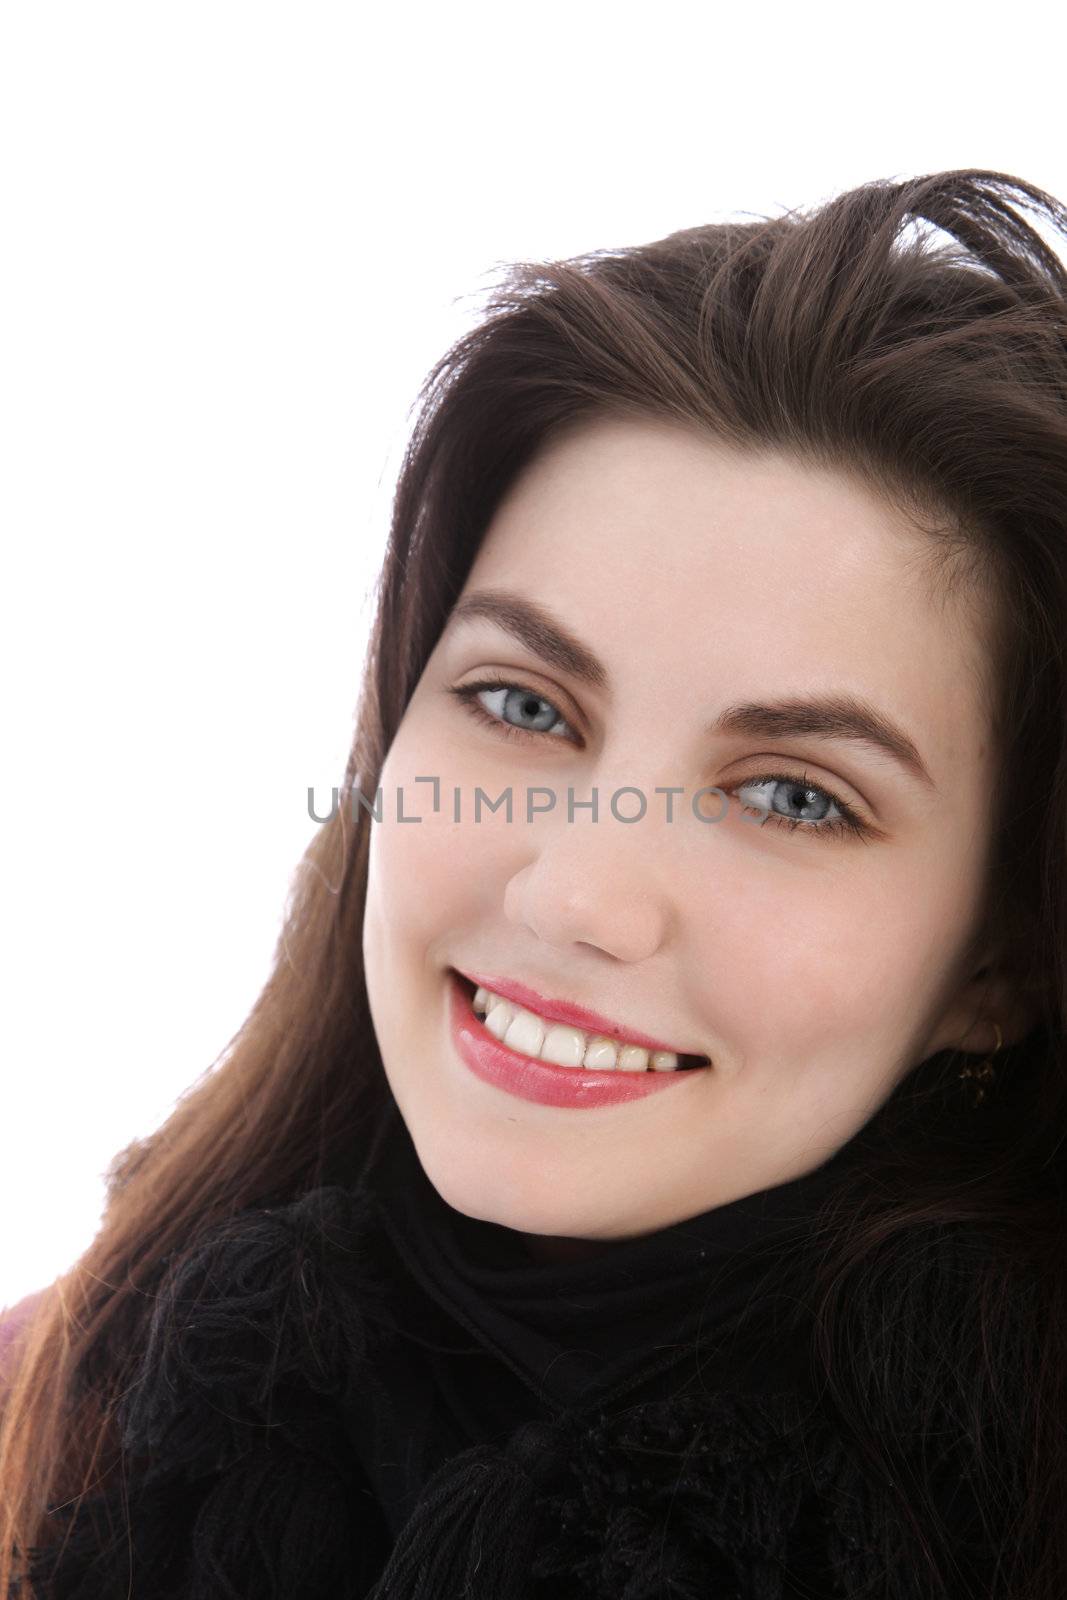 Blue eyed happy young woman looking at camera by Farina6000